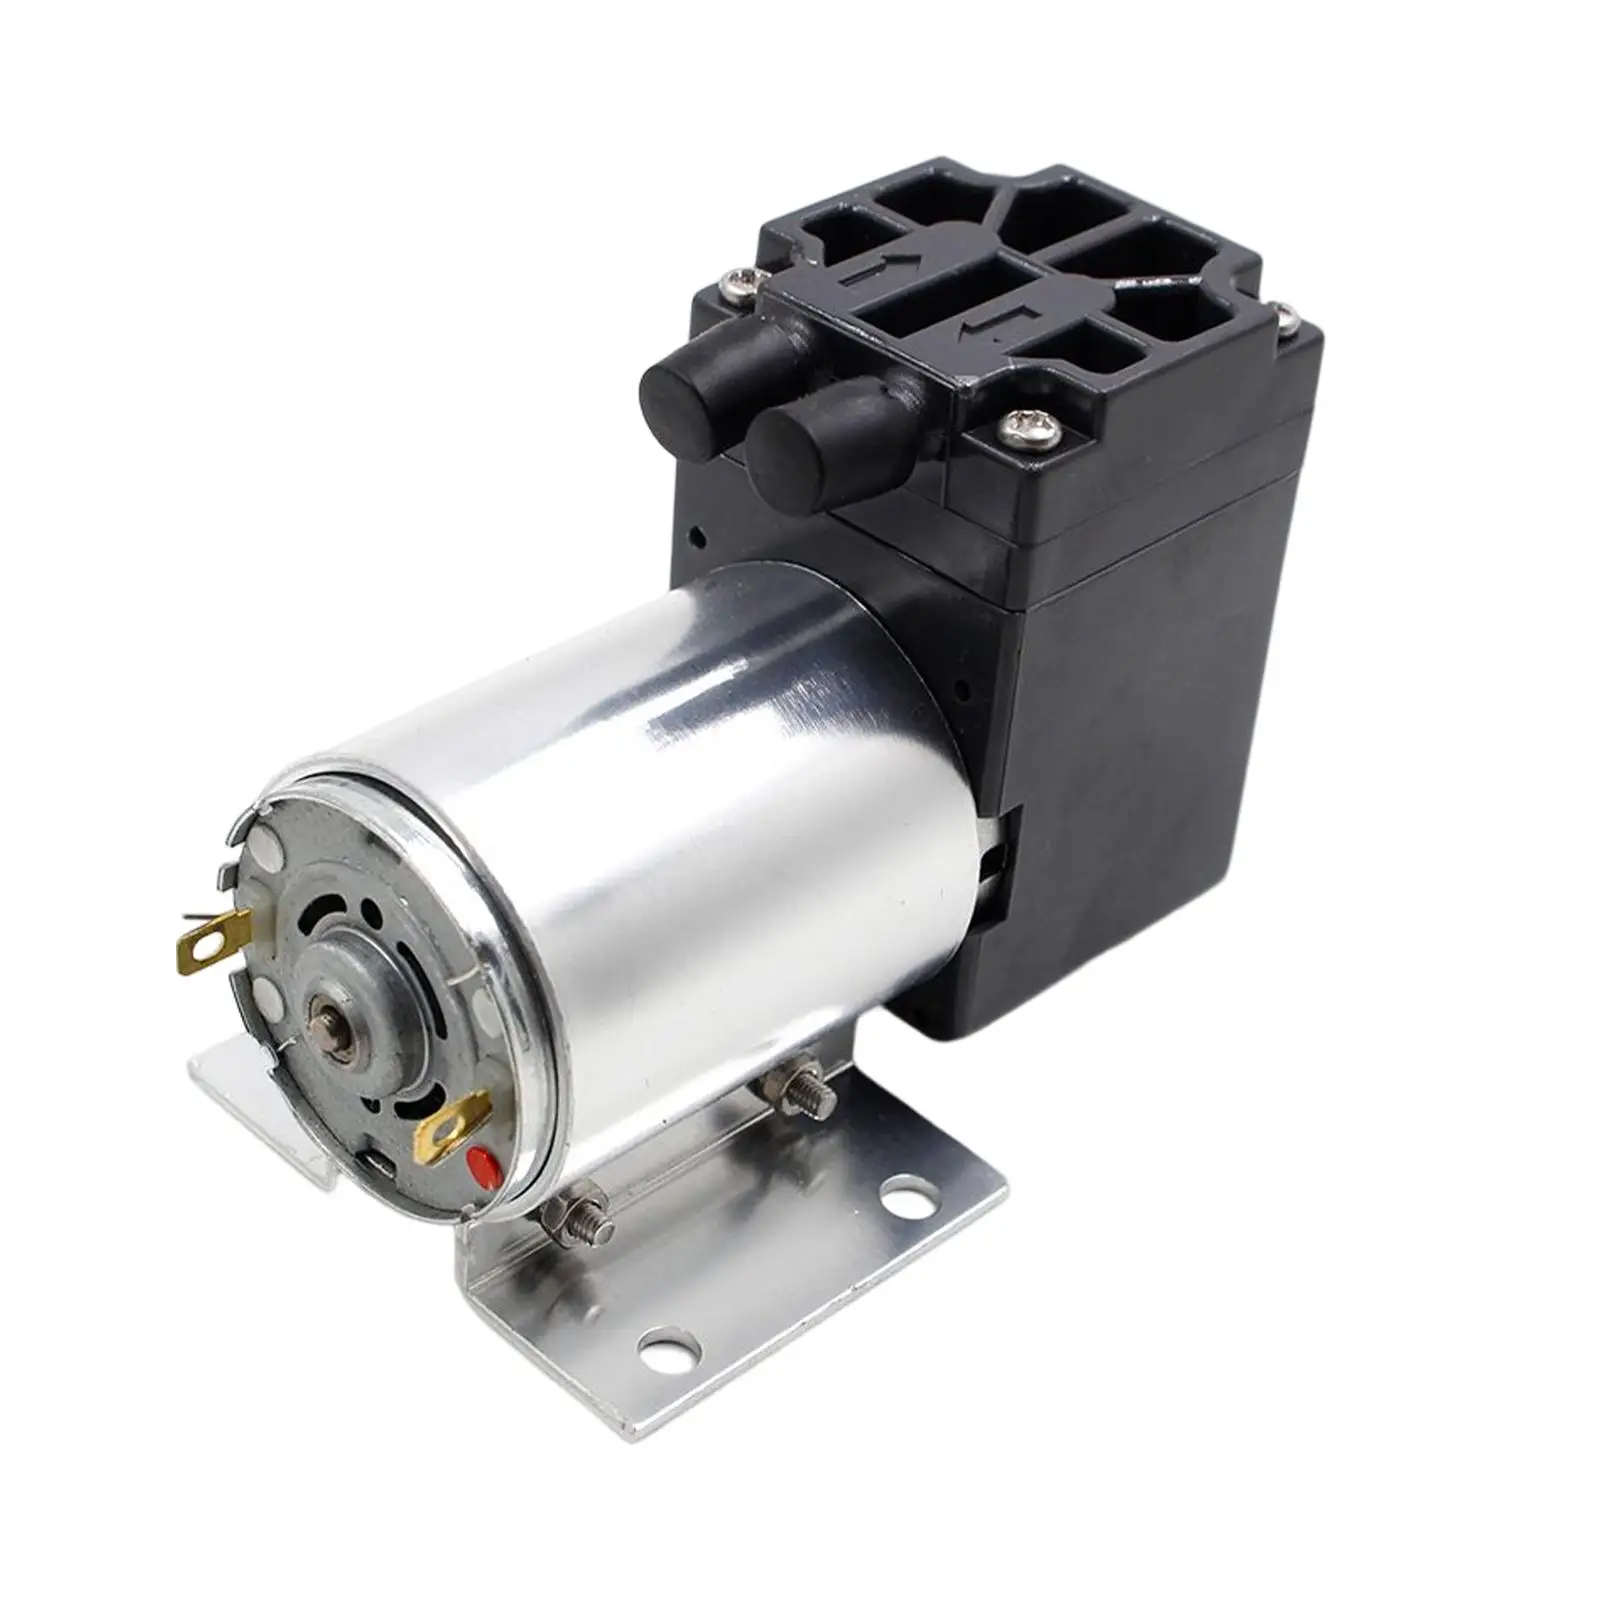 65-120Kpa DC12V 6W Micro Vacuum Pump Negative Pressure Suction Pump with Stand analysis Sampling Fuel Pumps